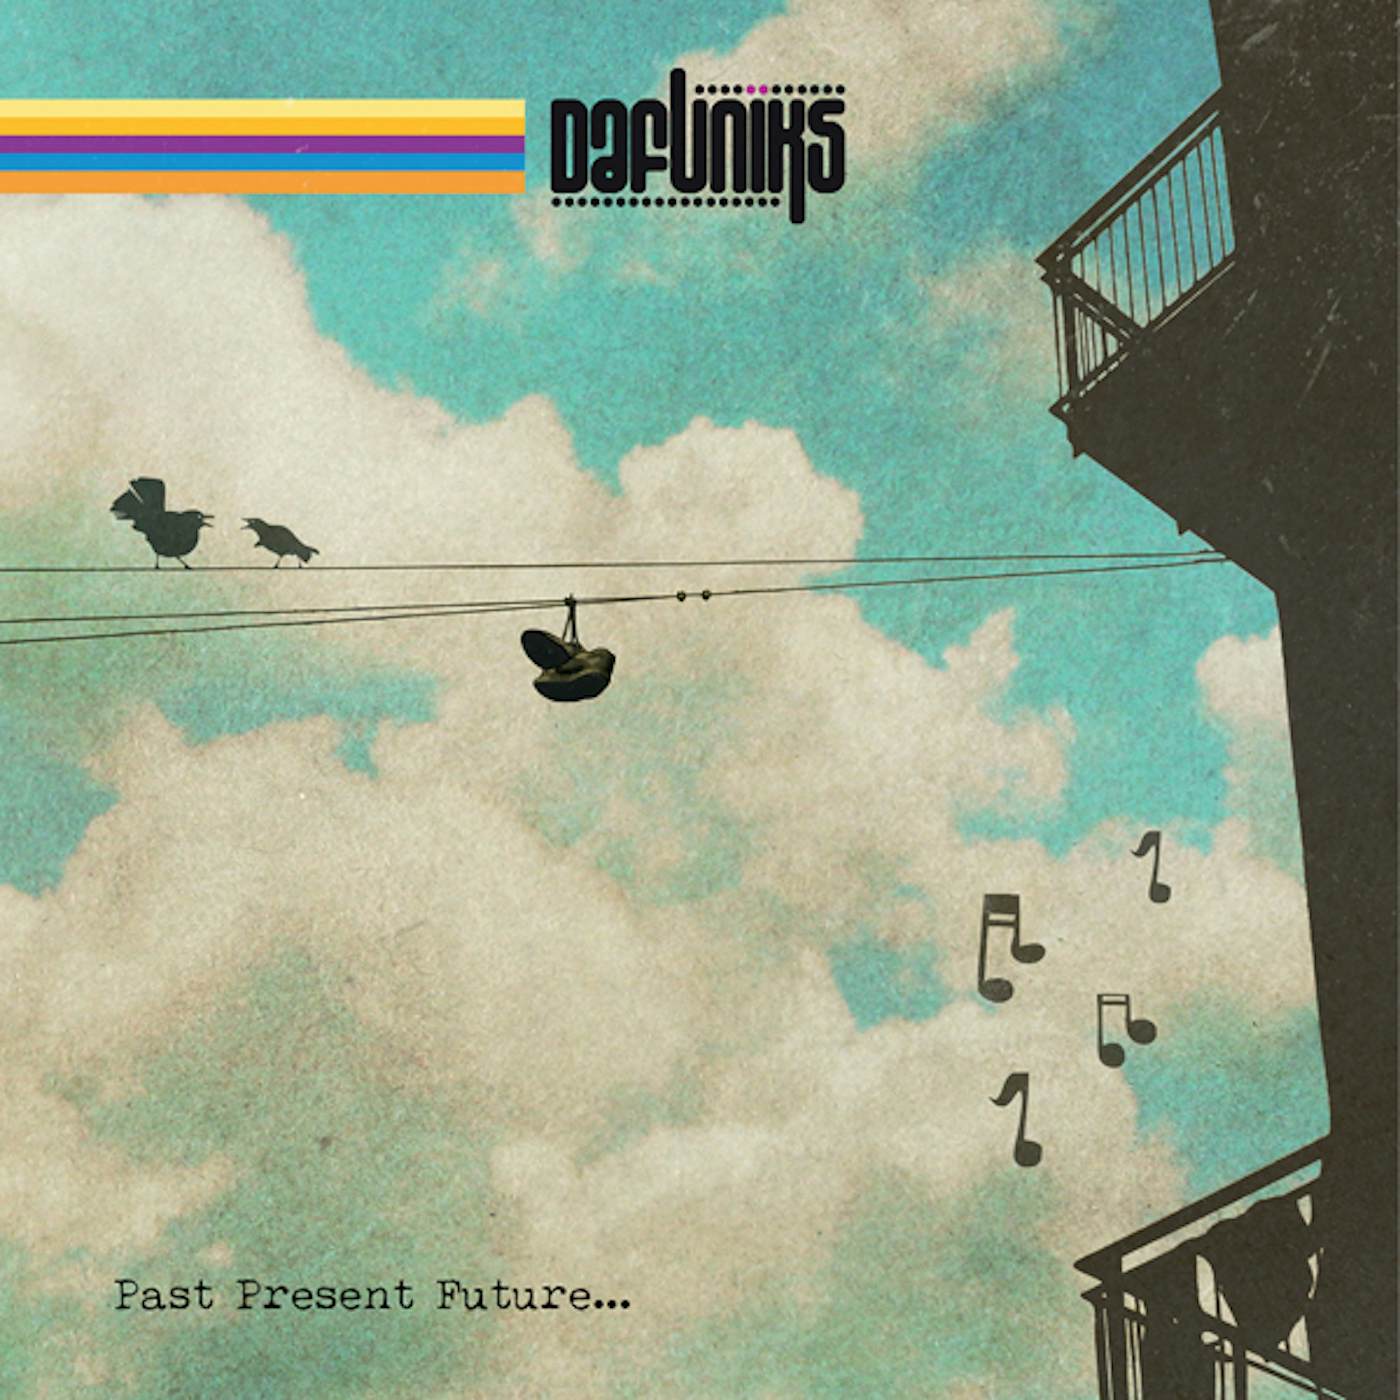 Dafuniks PAST PRESENT FUTURE Vinyl Record